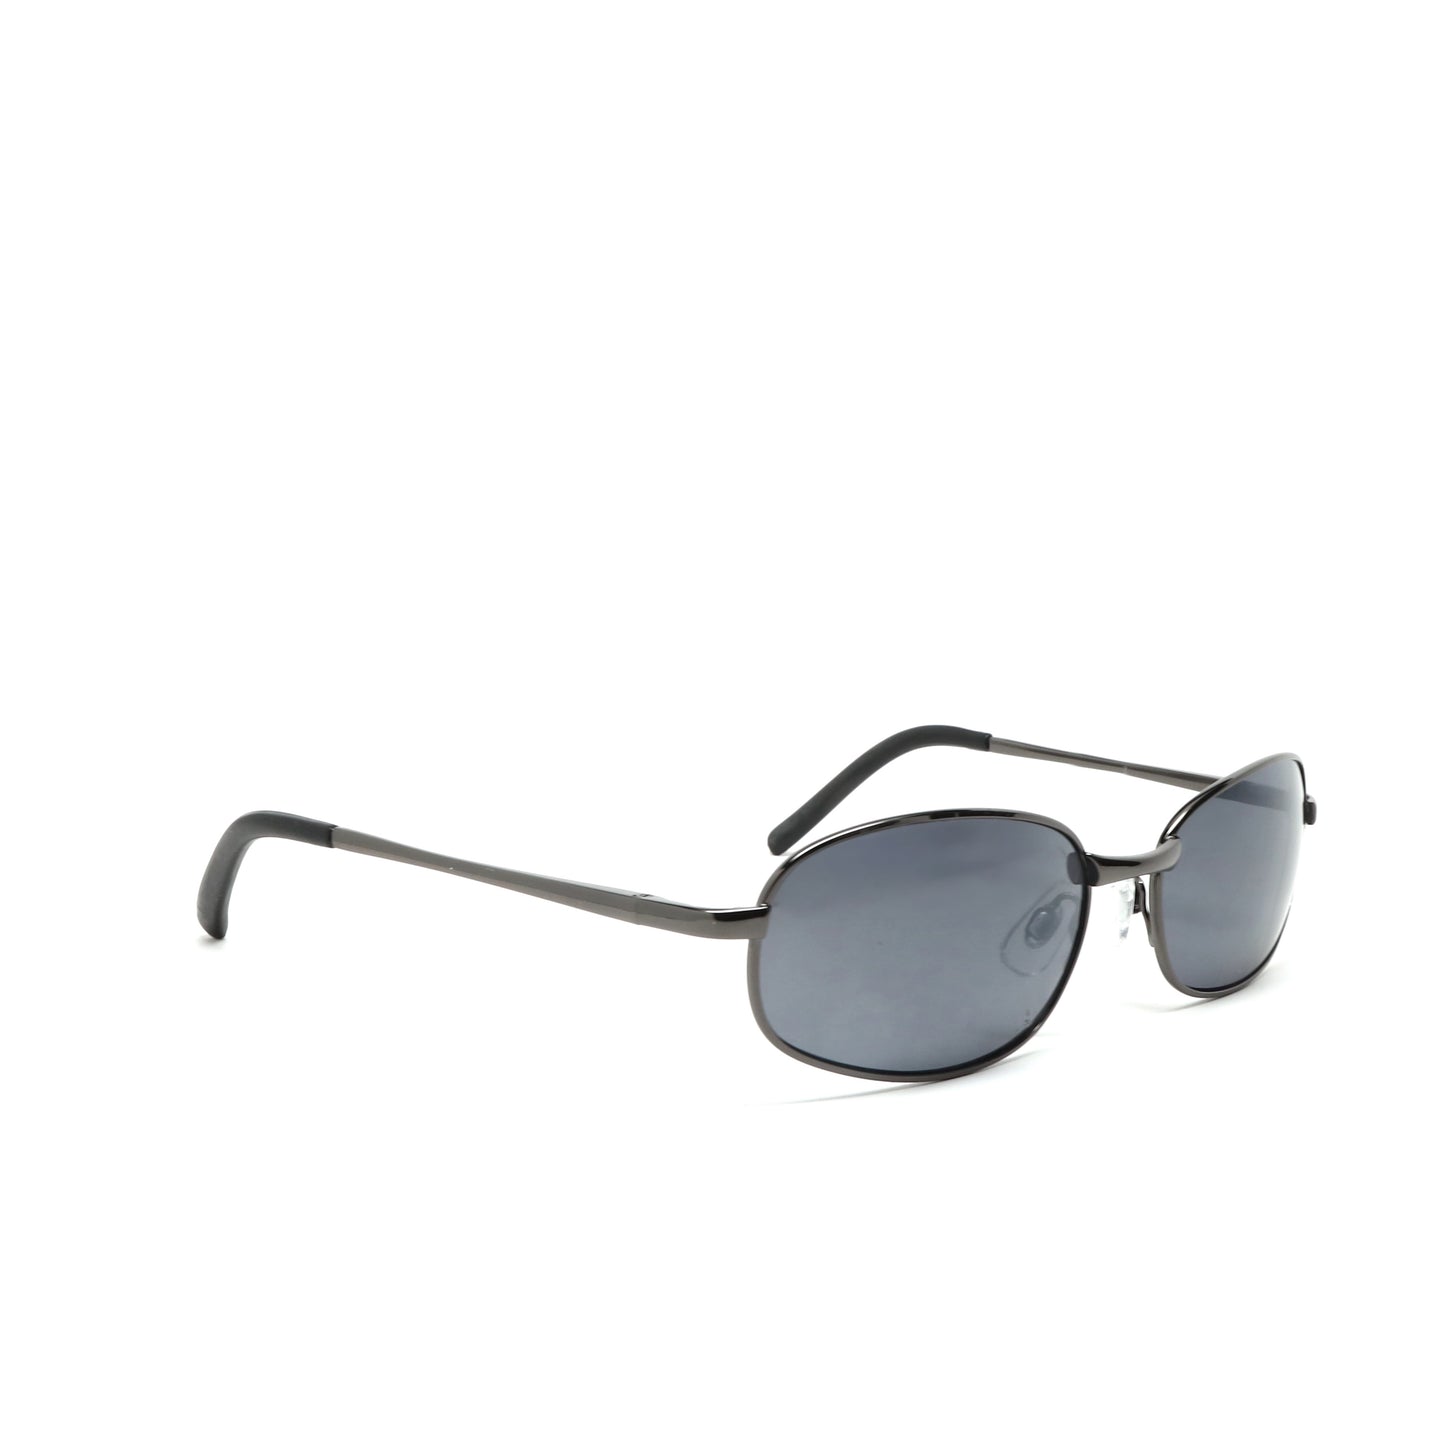 Vintage Standard Size 90s Matrix Style Rectangle Sunglasses - Grey